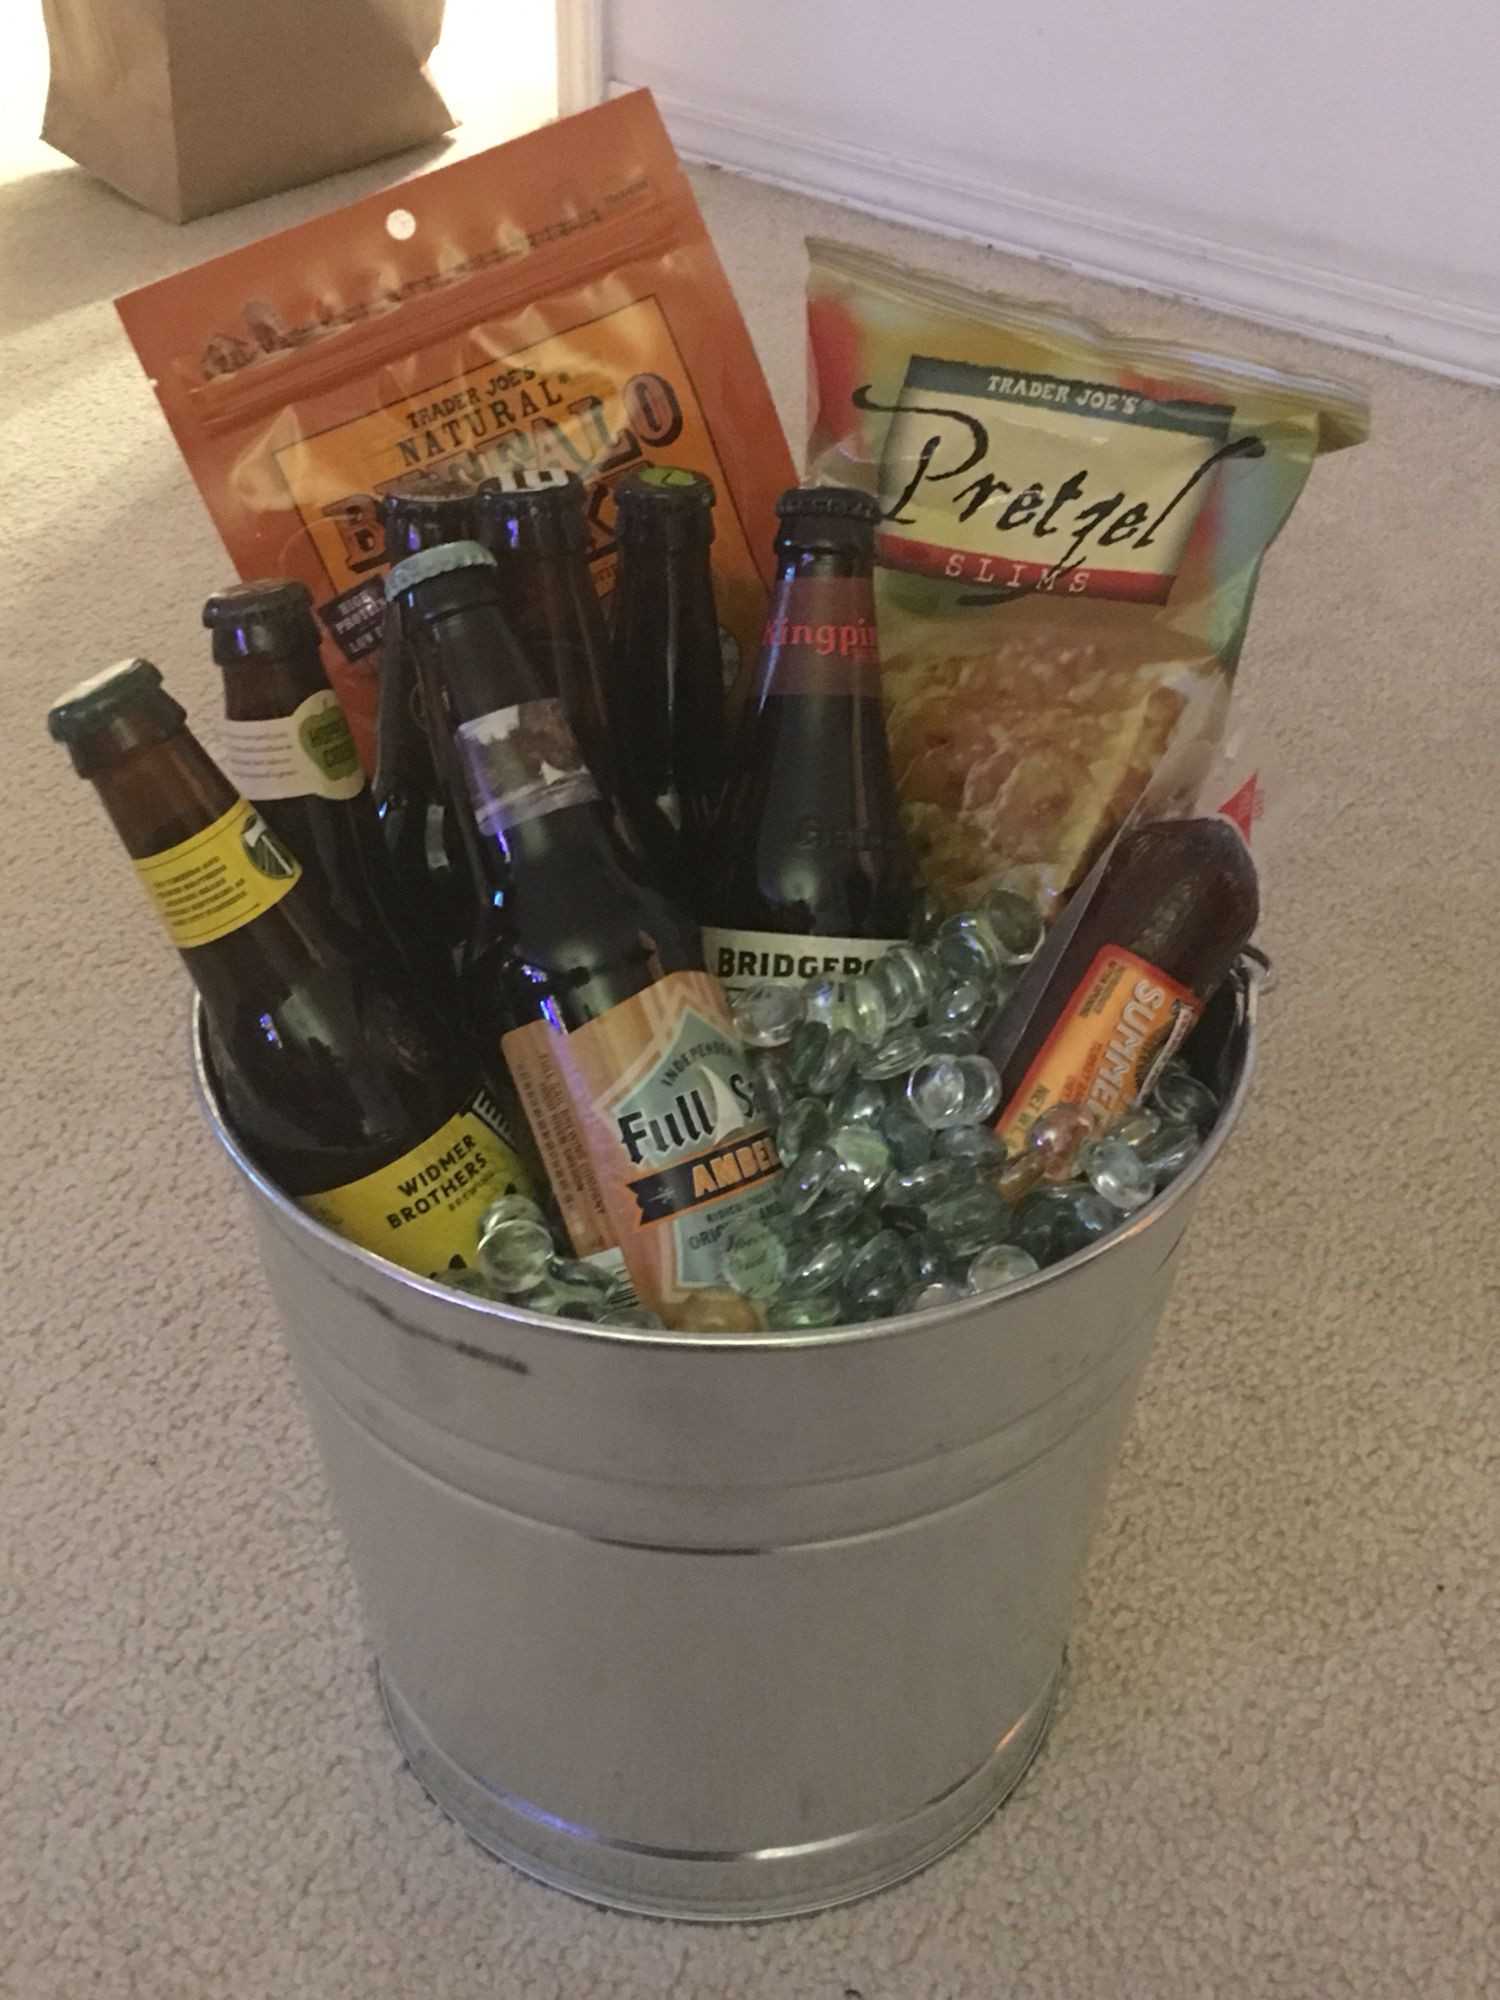 Beer Gift Basket Ideas
 BEER GIFT BASKET